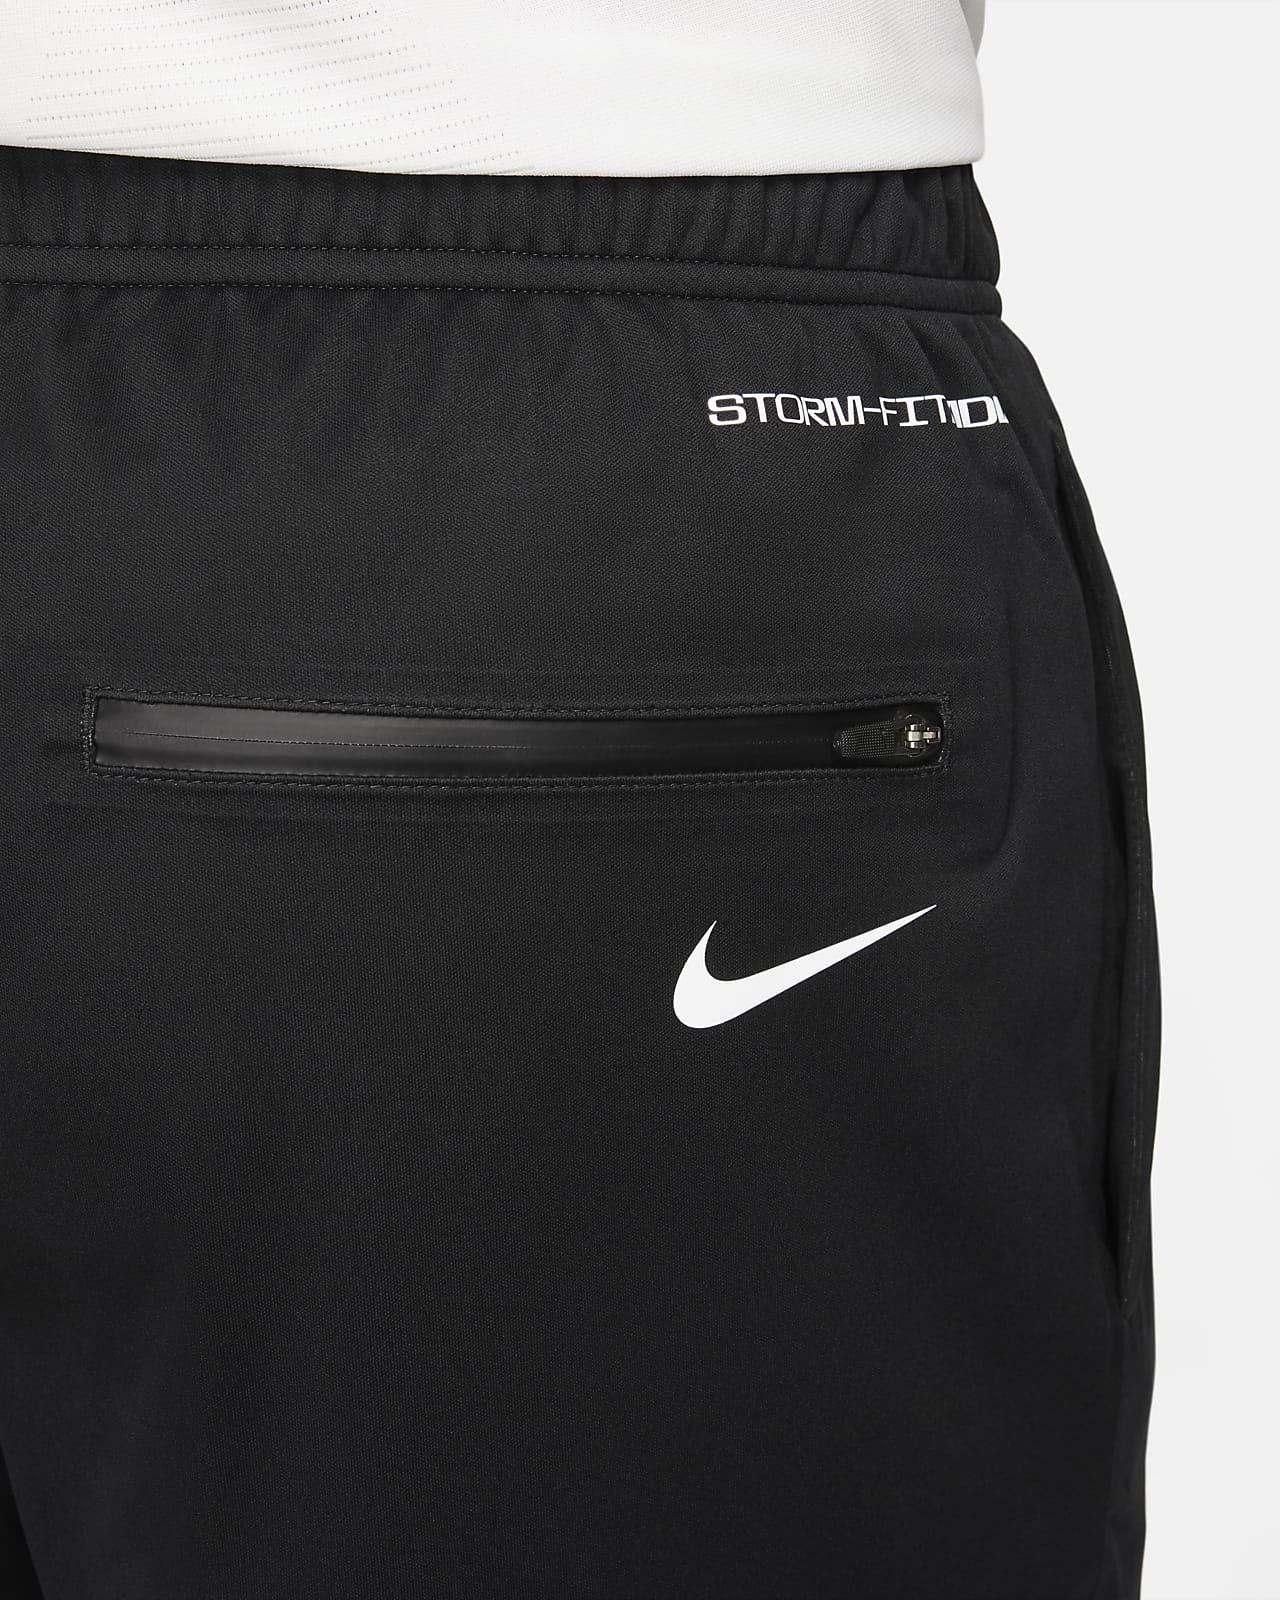 Buy Nike Storm-FIT ADV Rain Pants